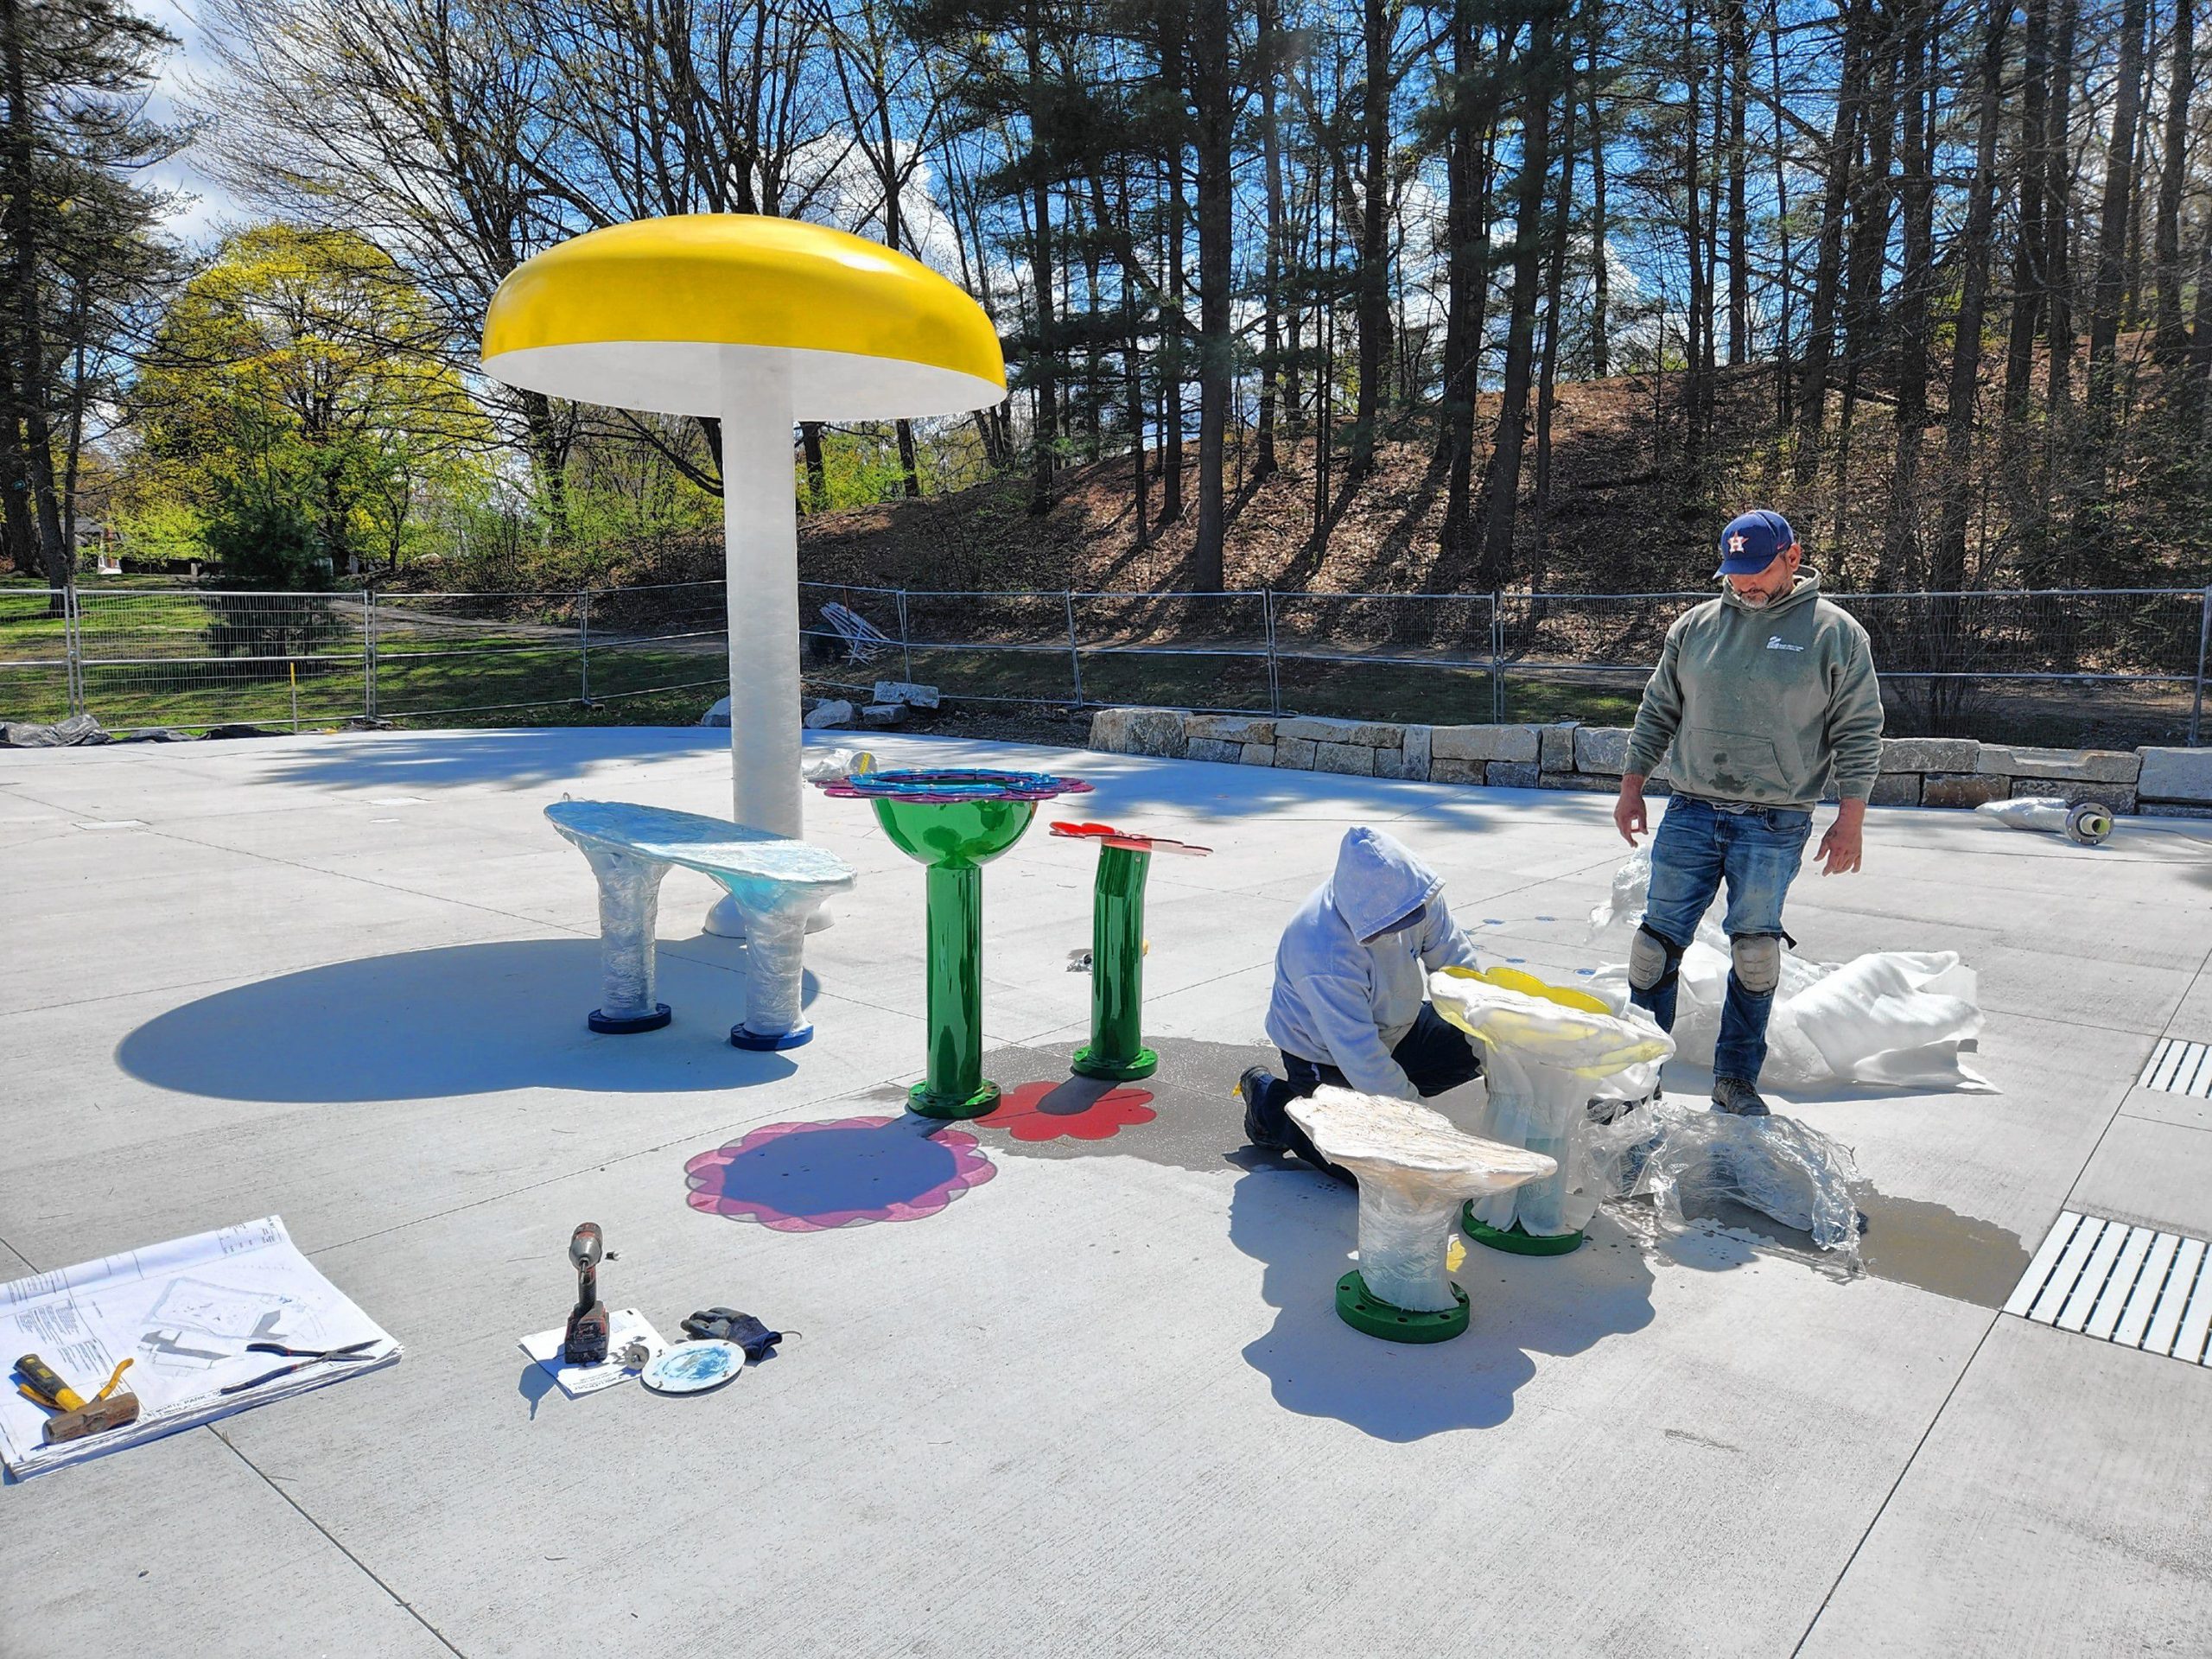 City news: Splash pad advances at White Park The Concord Insider